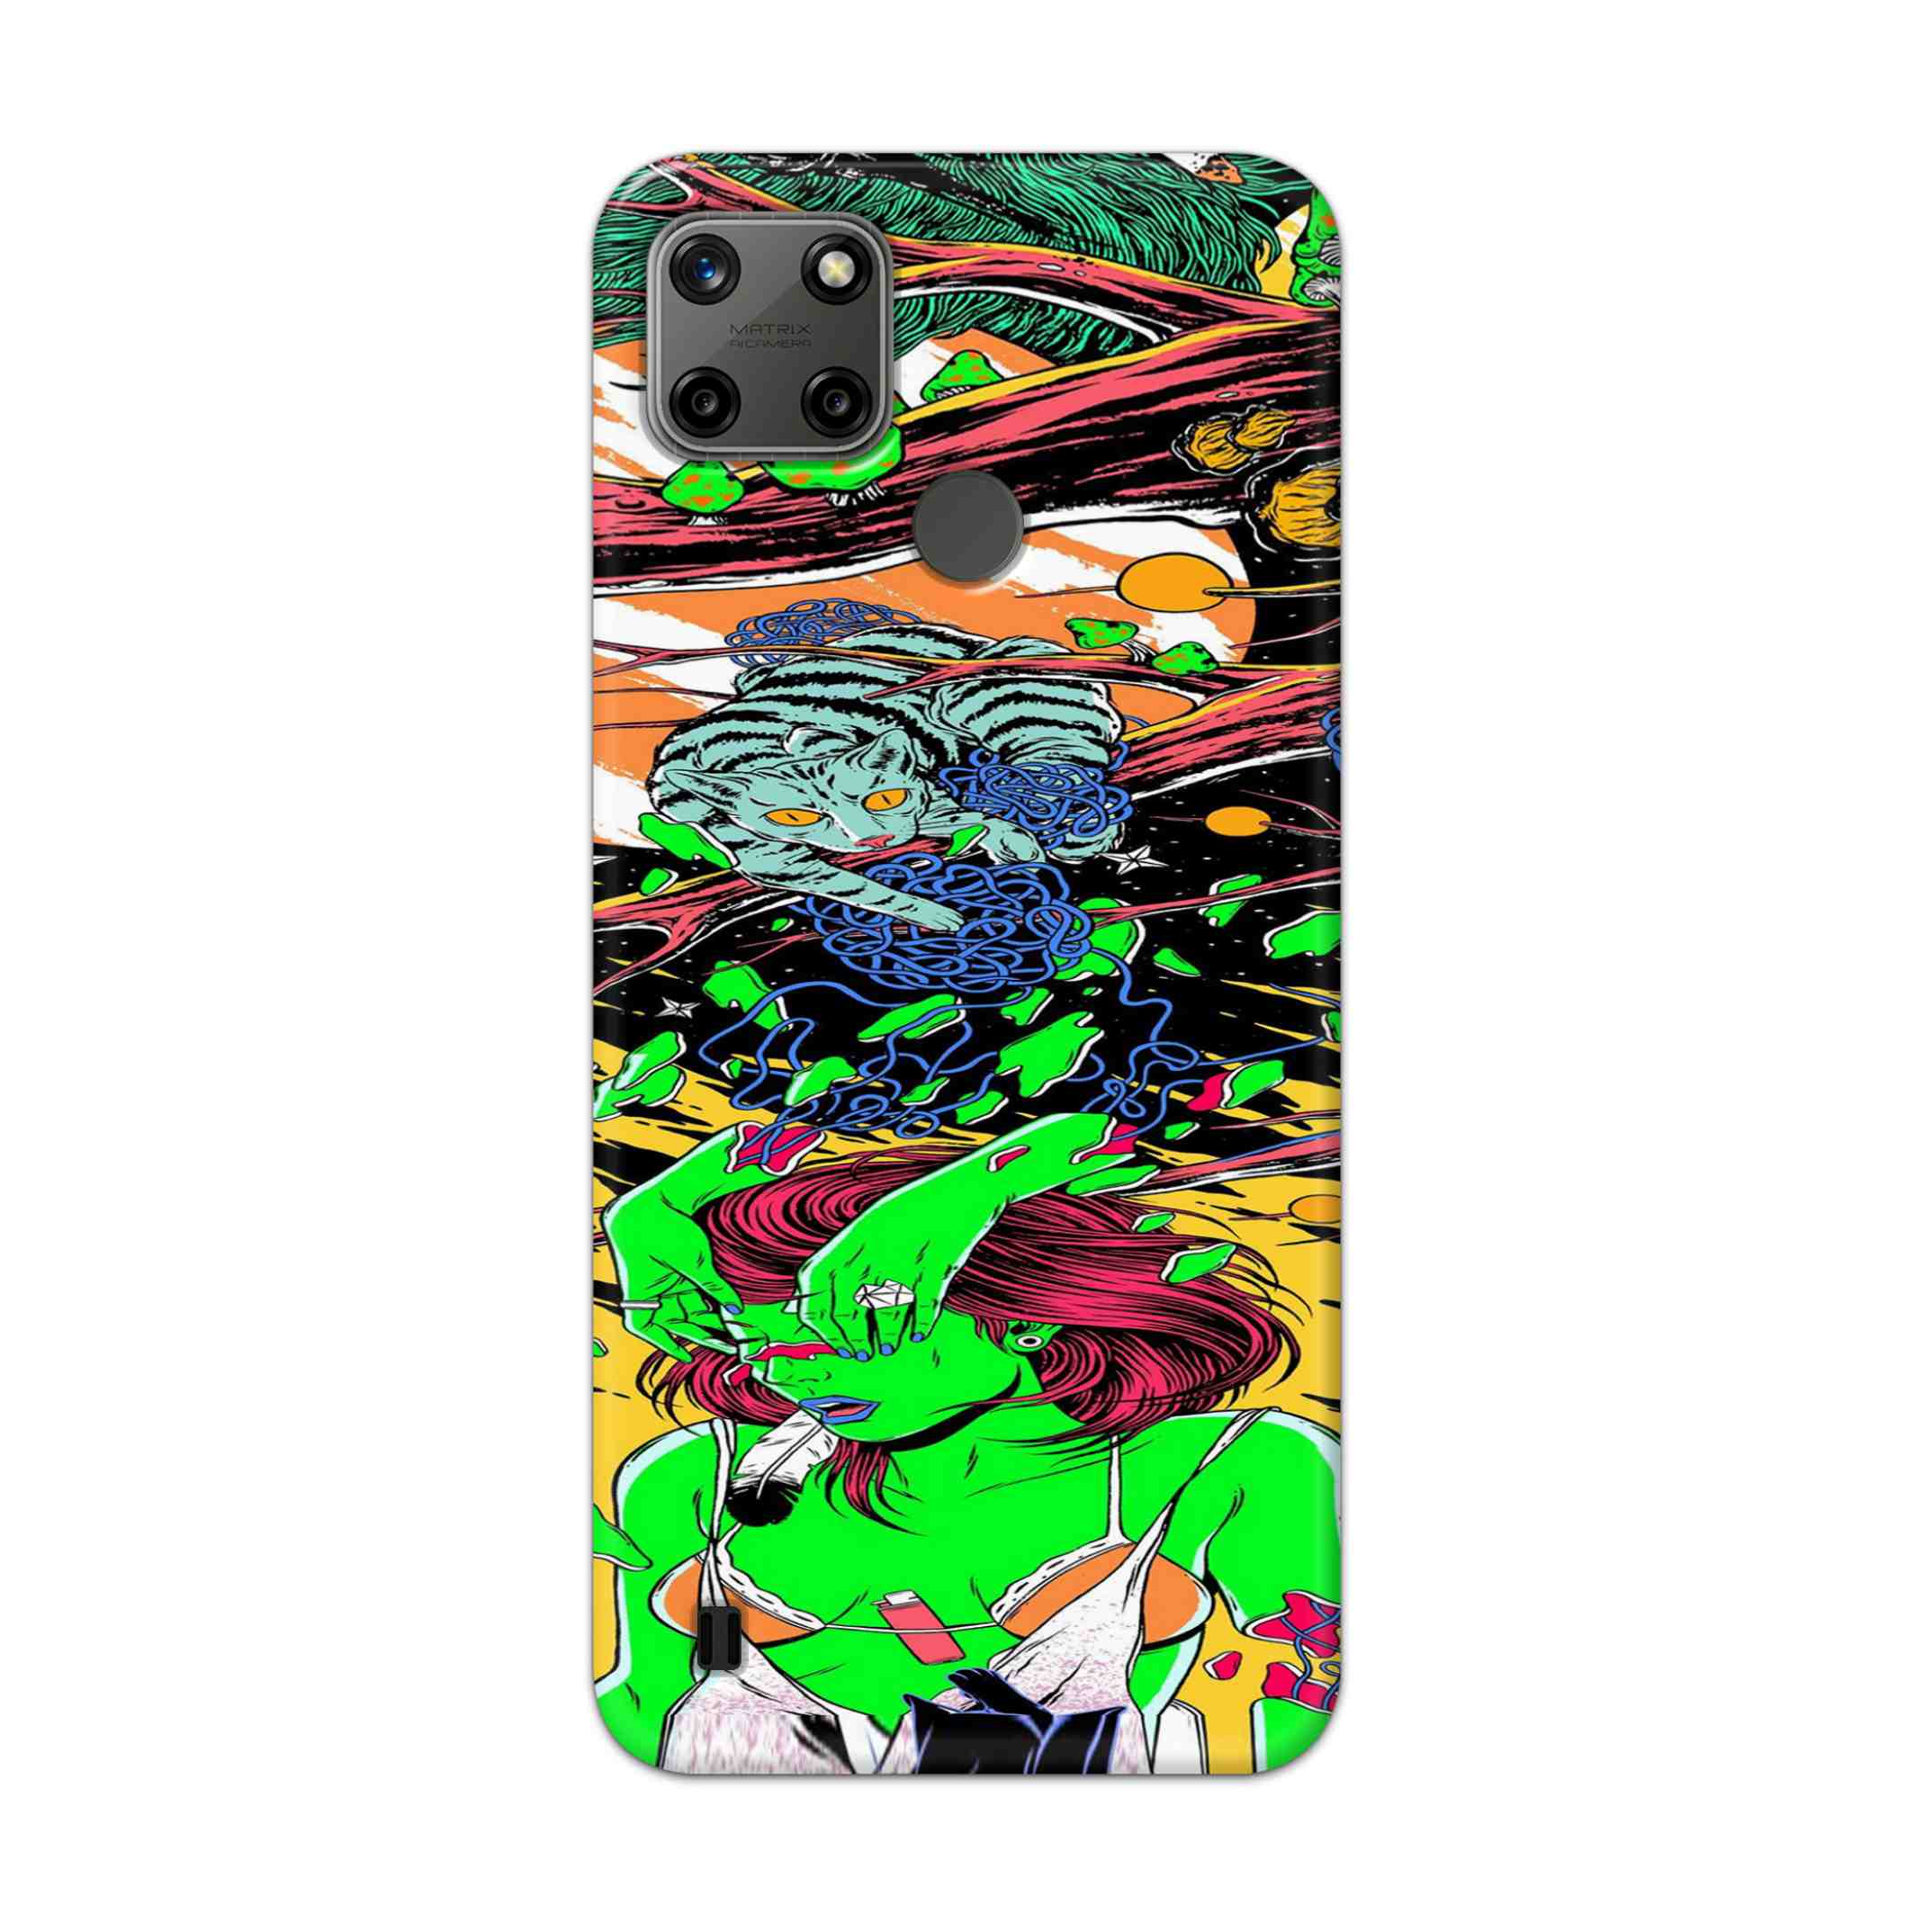 Buy Green Girl Art Hard Back Mobile Phone Case Cover For Realme C25Y Online